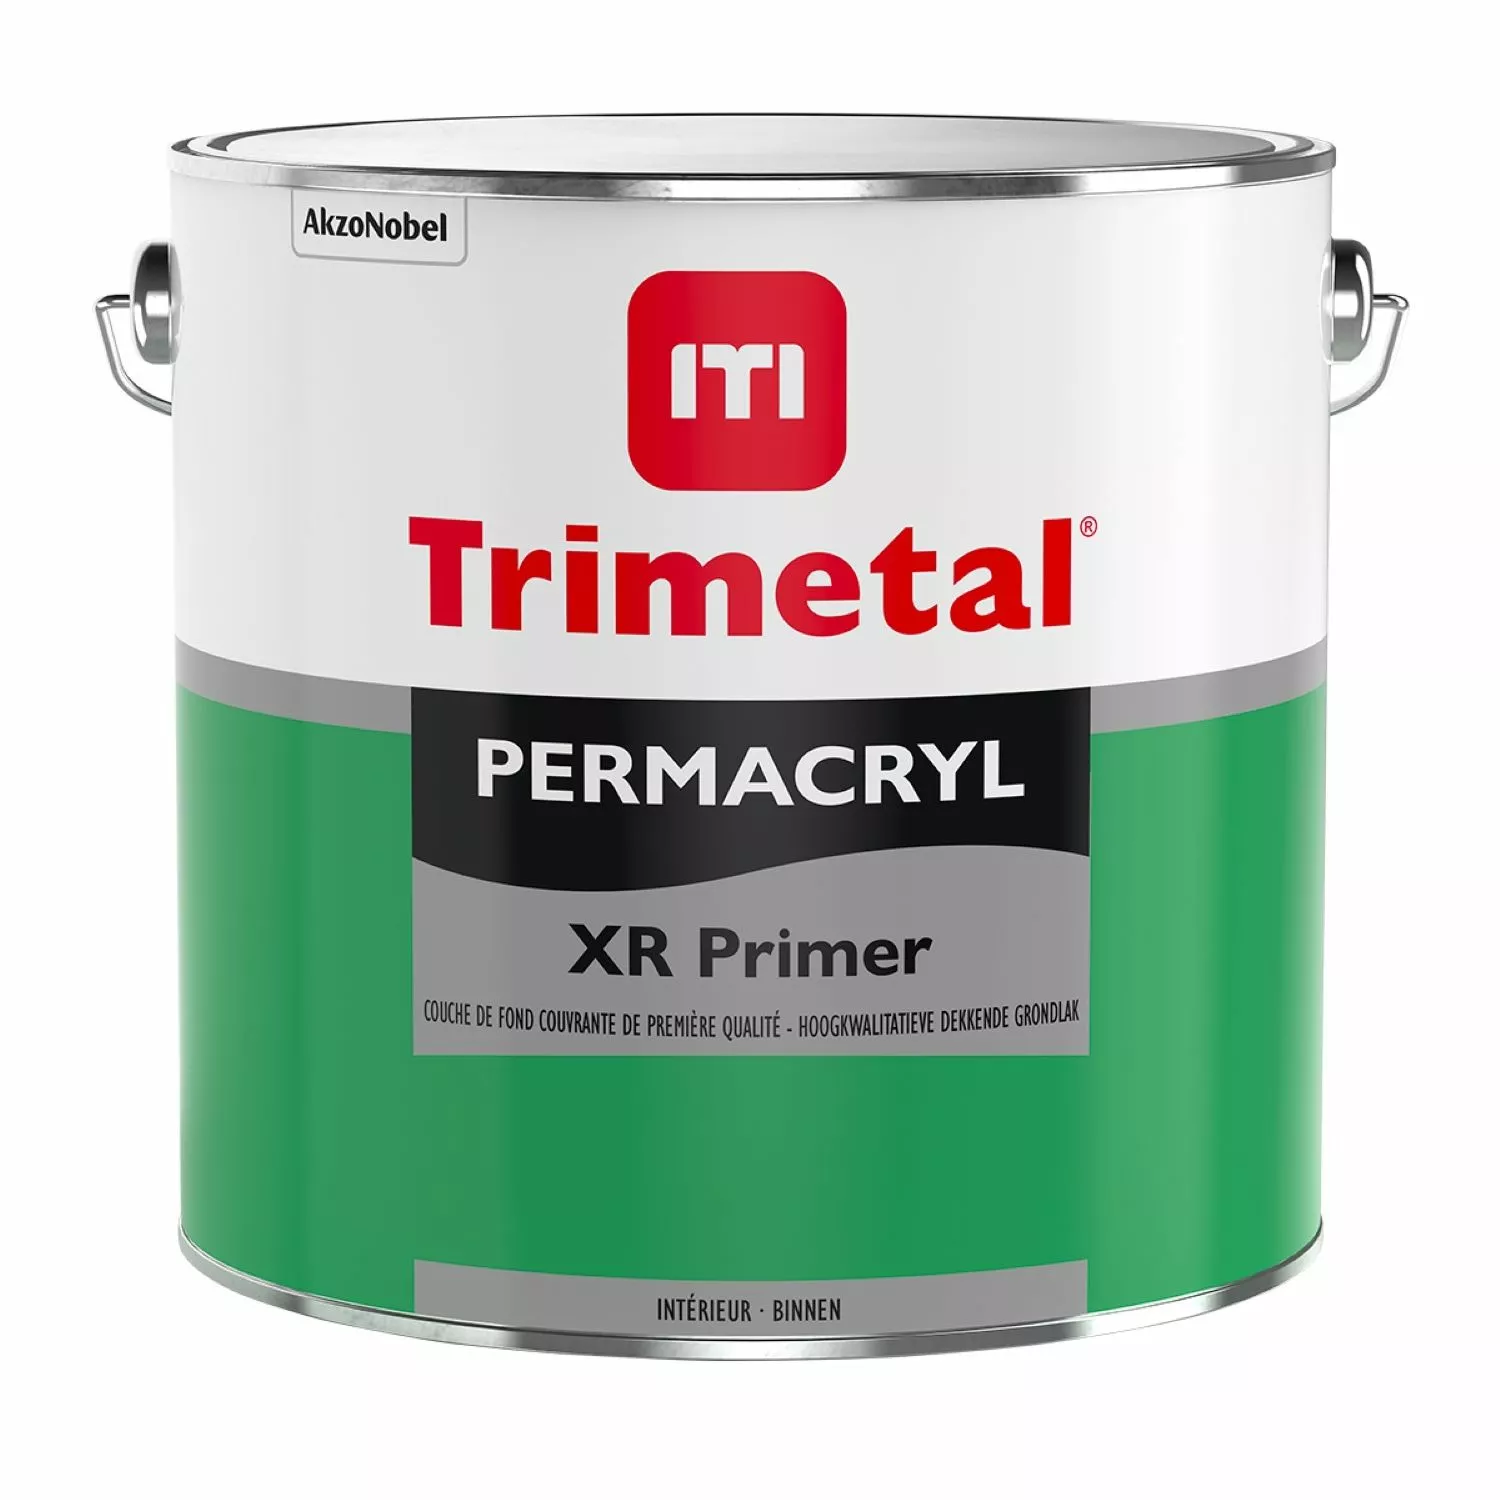 Trimetal Permacryl XR Primer grondlak - op kleur gemengd - 500ML-image